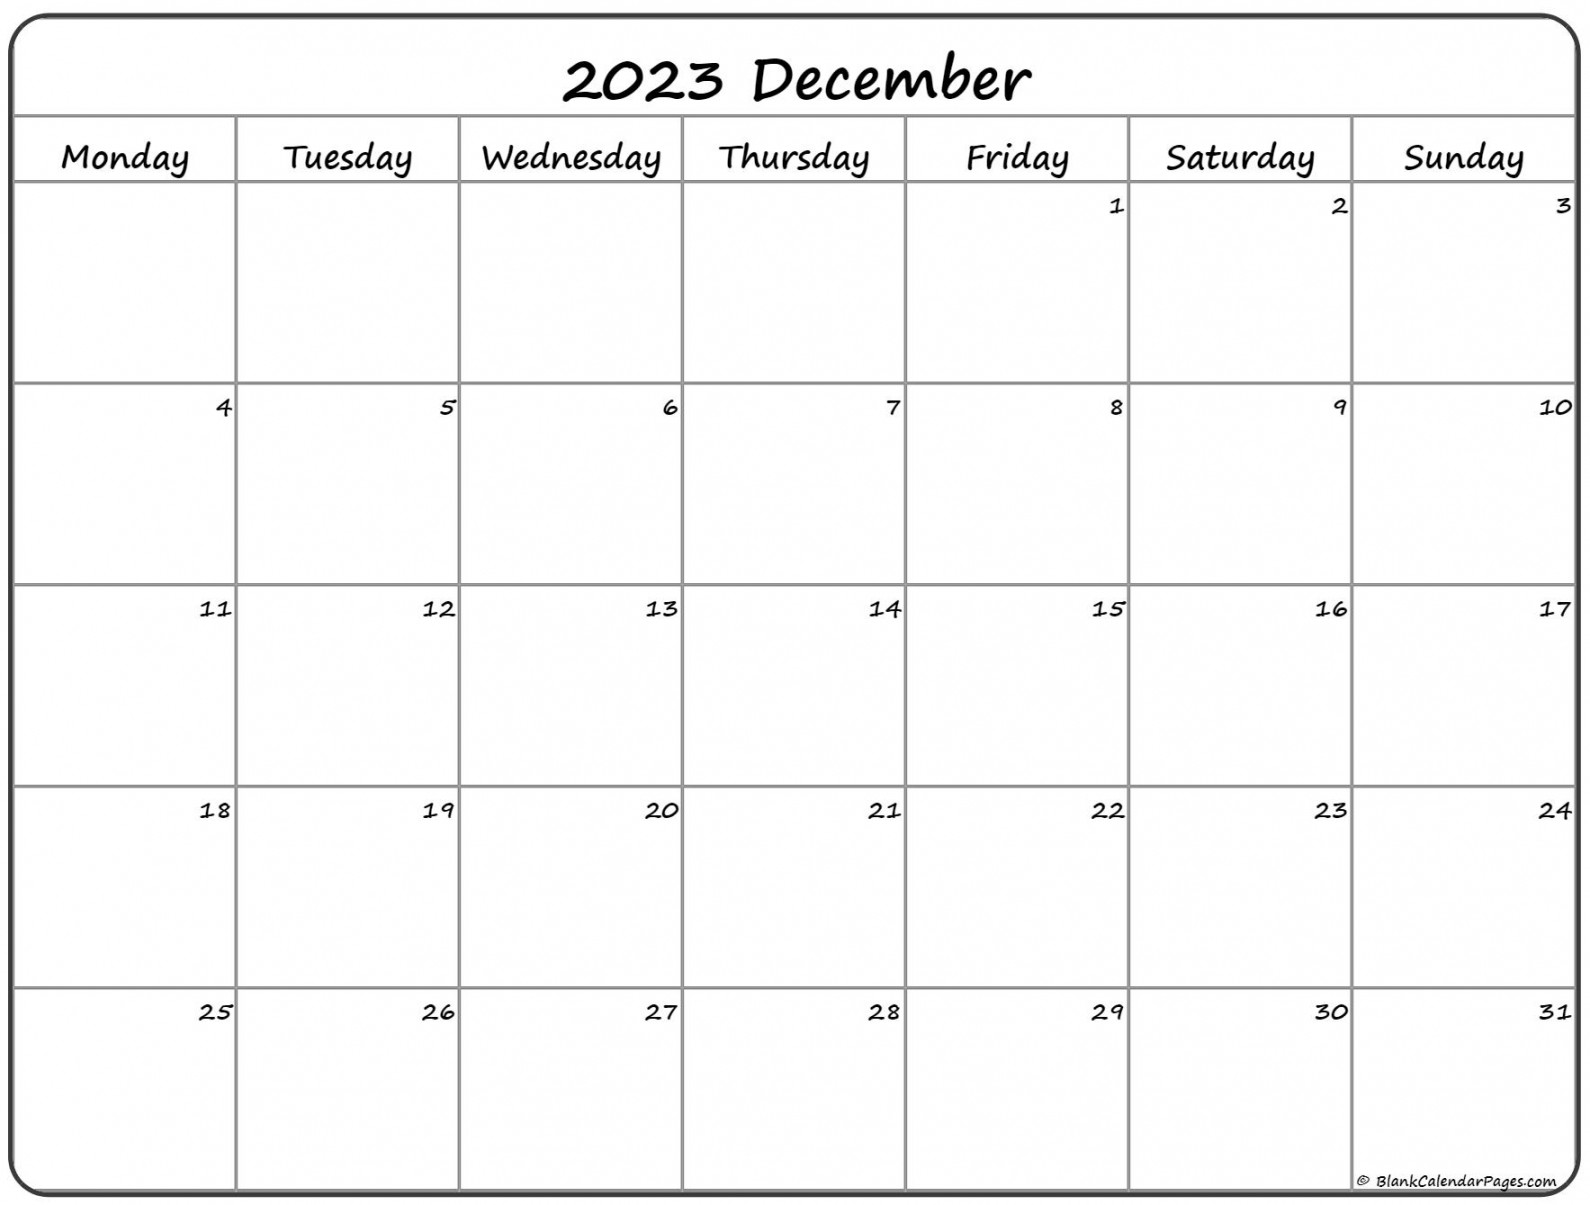 december monday calendar monday to sunday 1